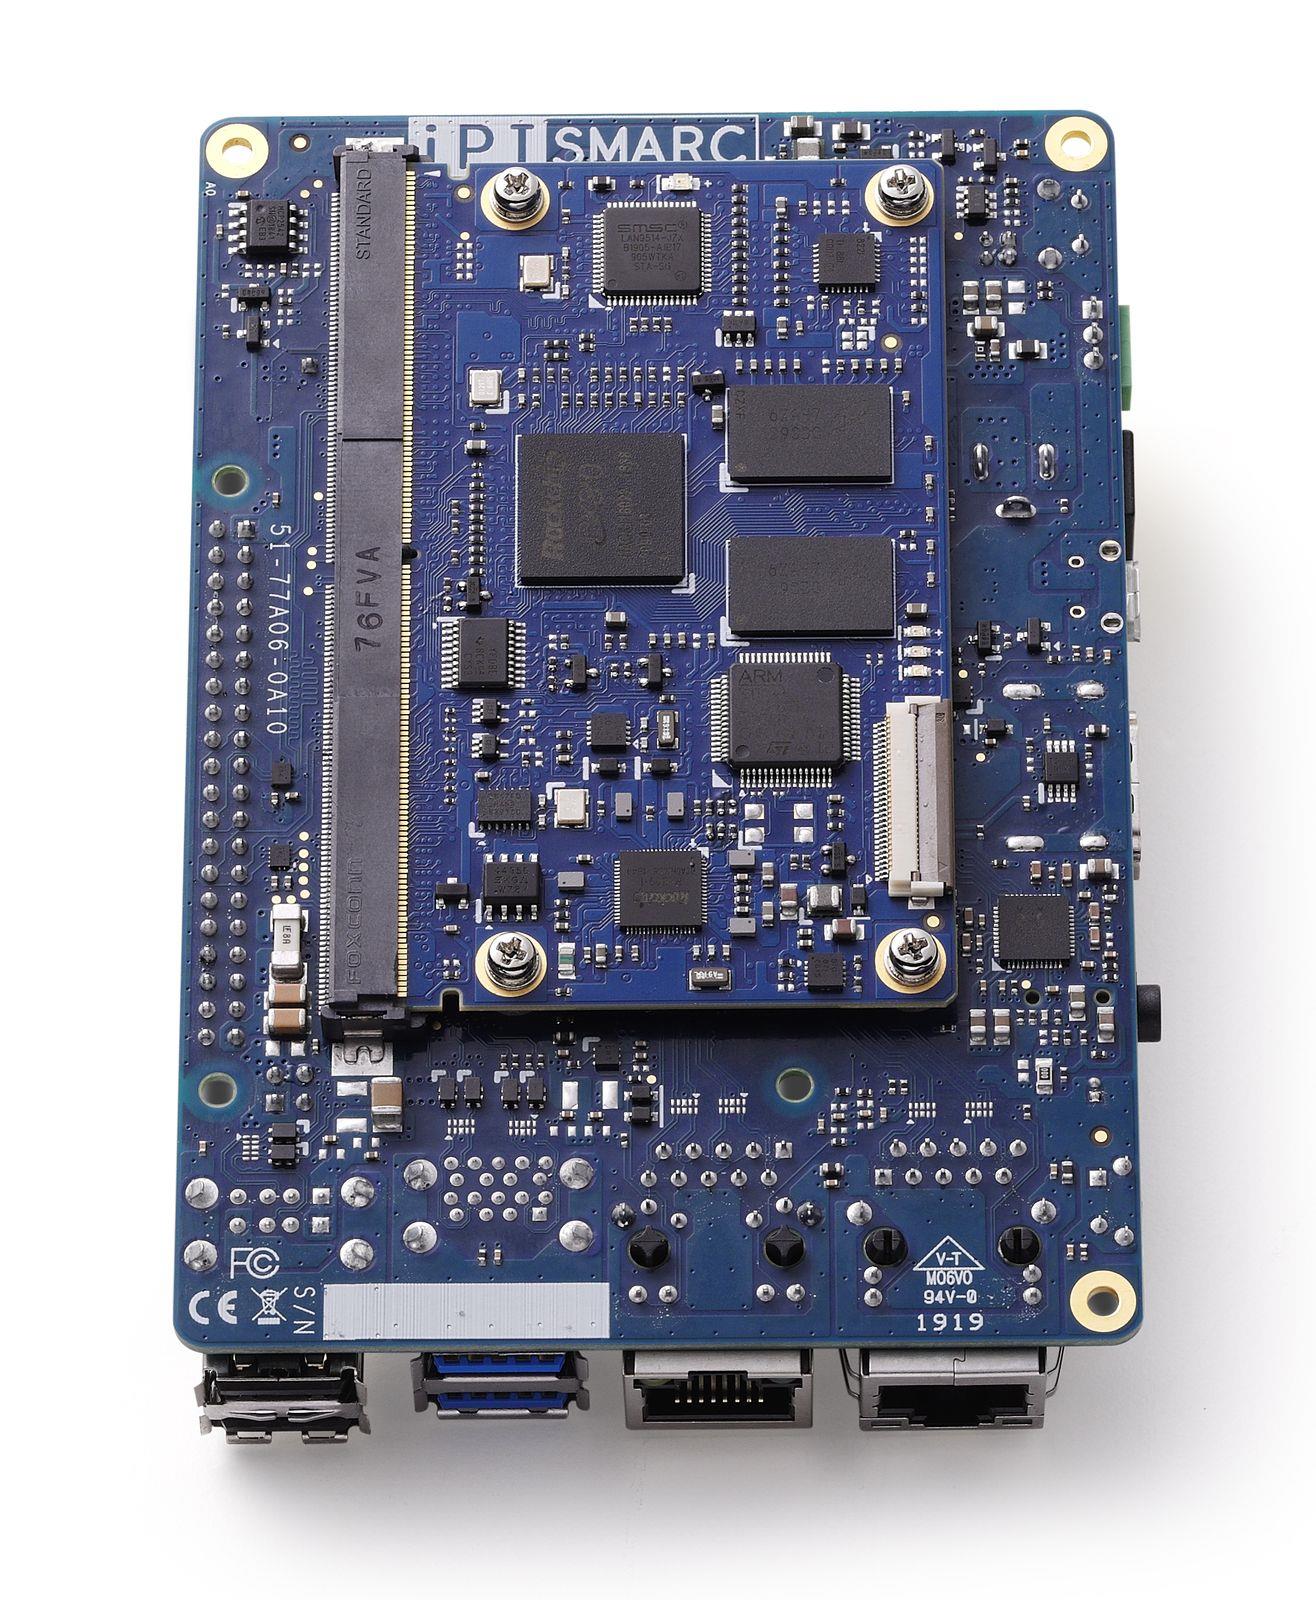 I-Pi SMARC PX30 module image.